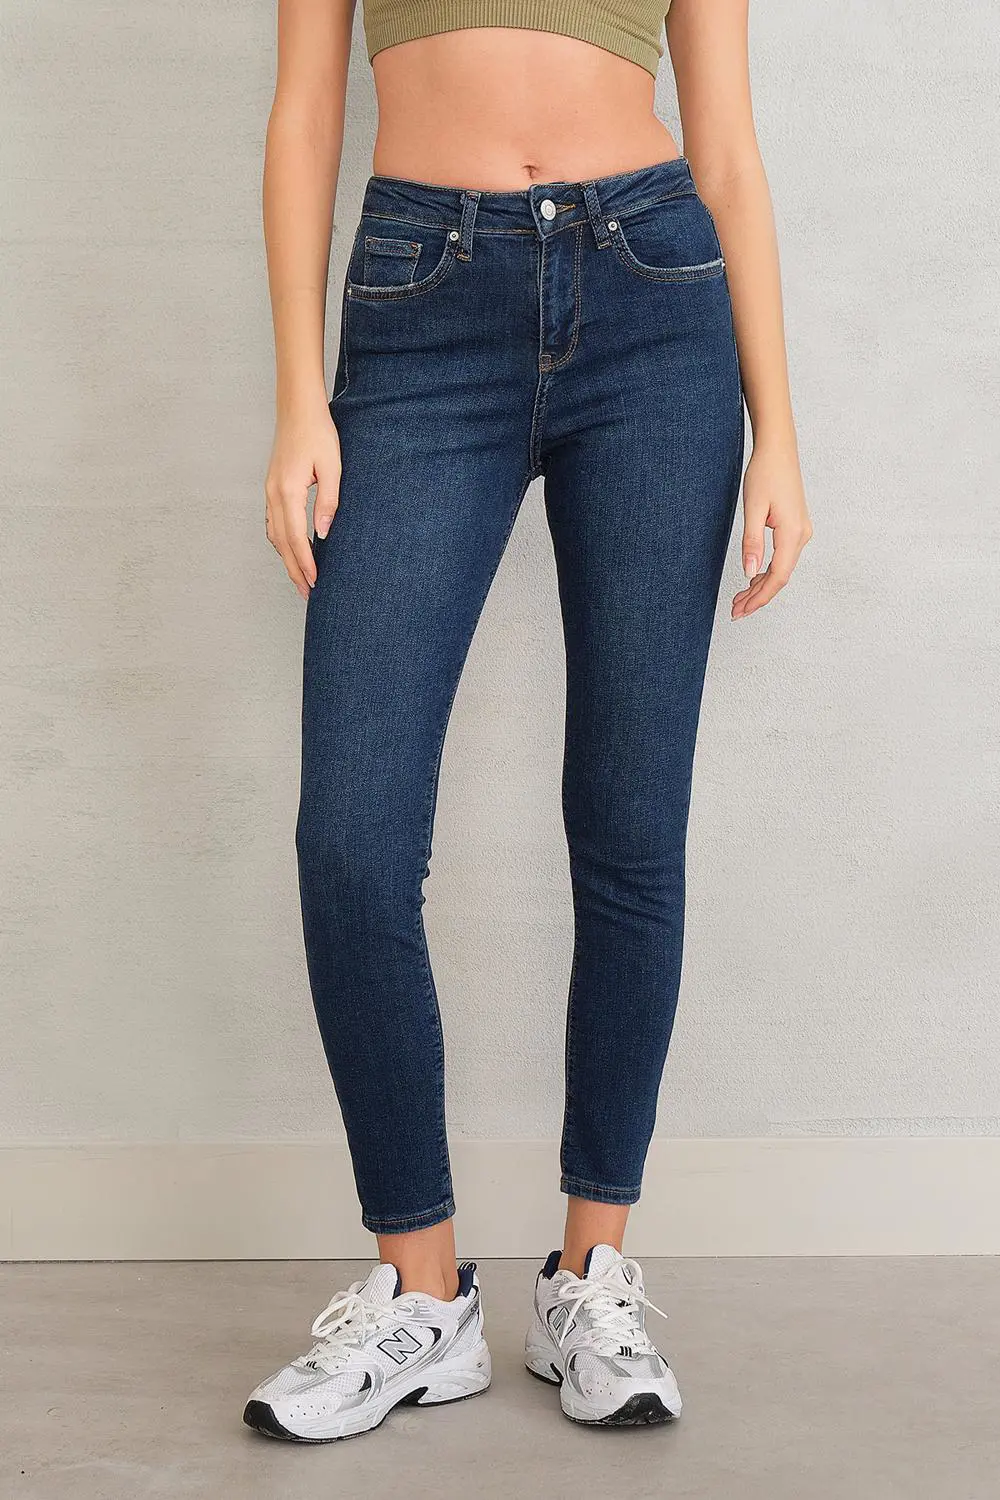 Addax Yüksek Bel Skinny Jean Pantolon. 1